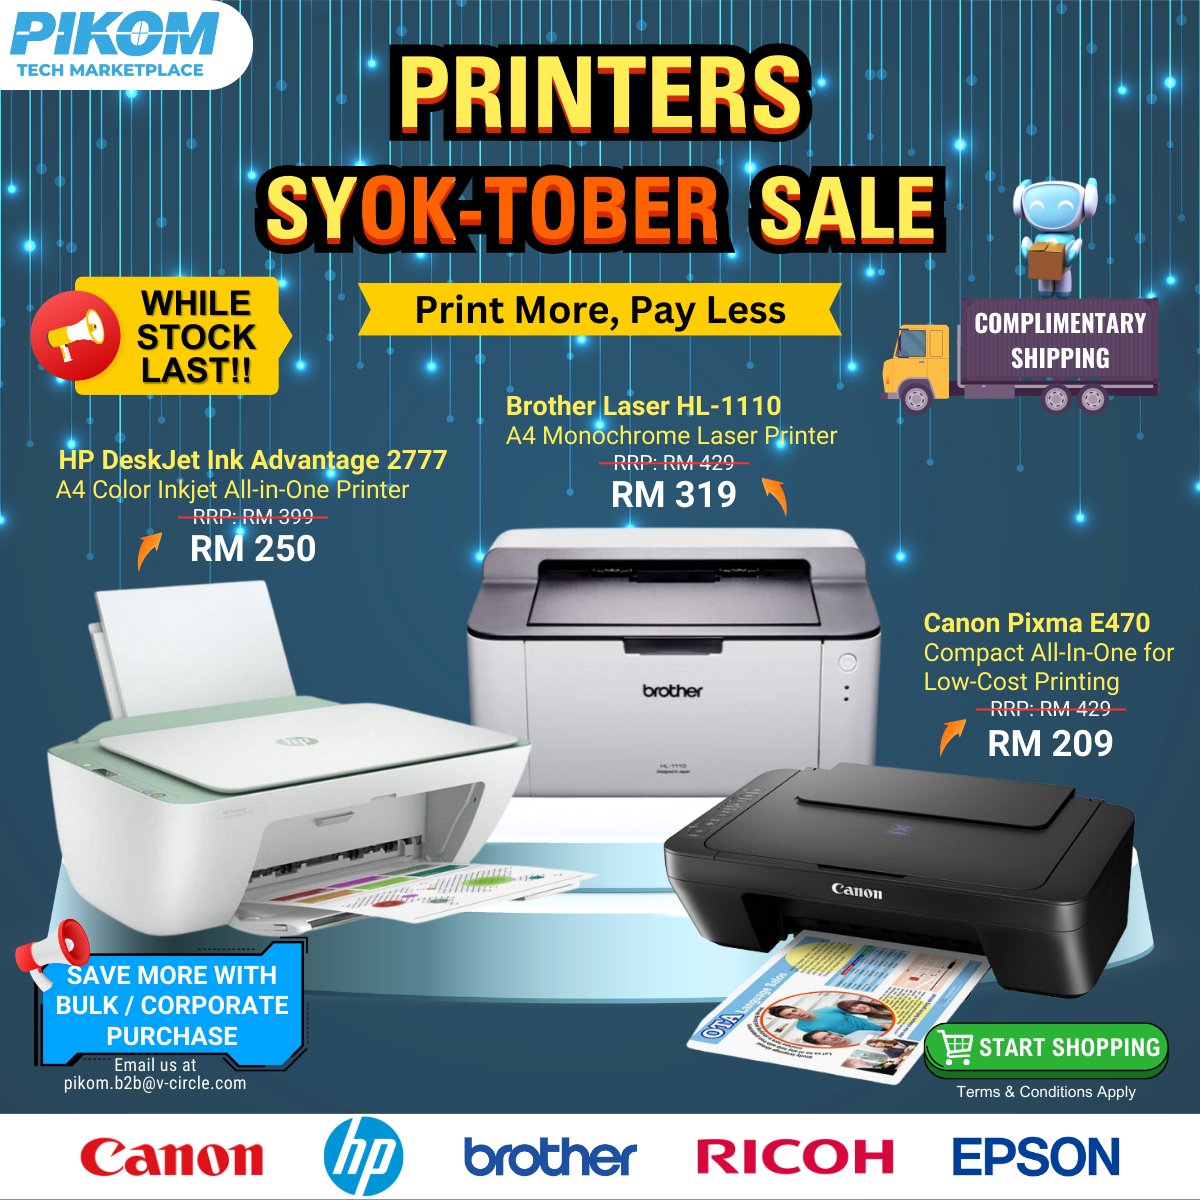 #PIKOMTechMarketplace #PIKOM #PikomTechFair #OnlineShopping #printer #affordableprinter #aioprinter #print #PrintMorePayLess #printersale